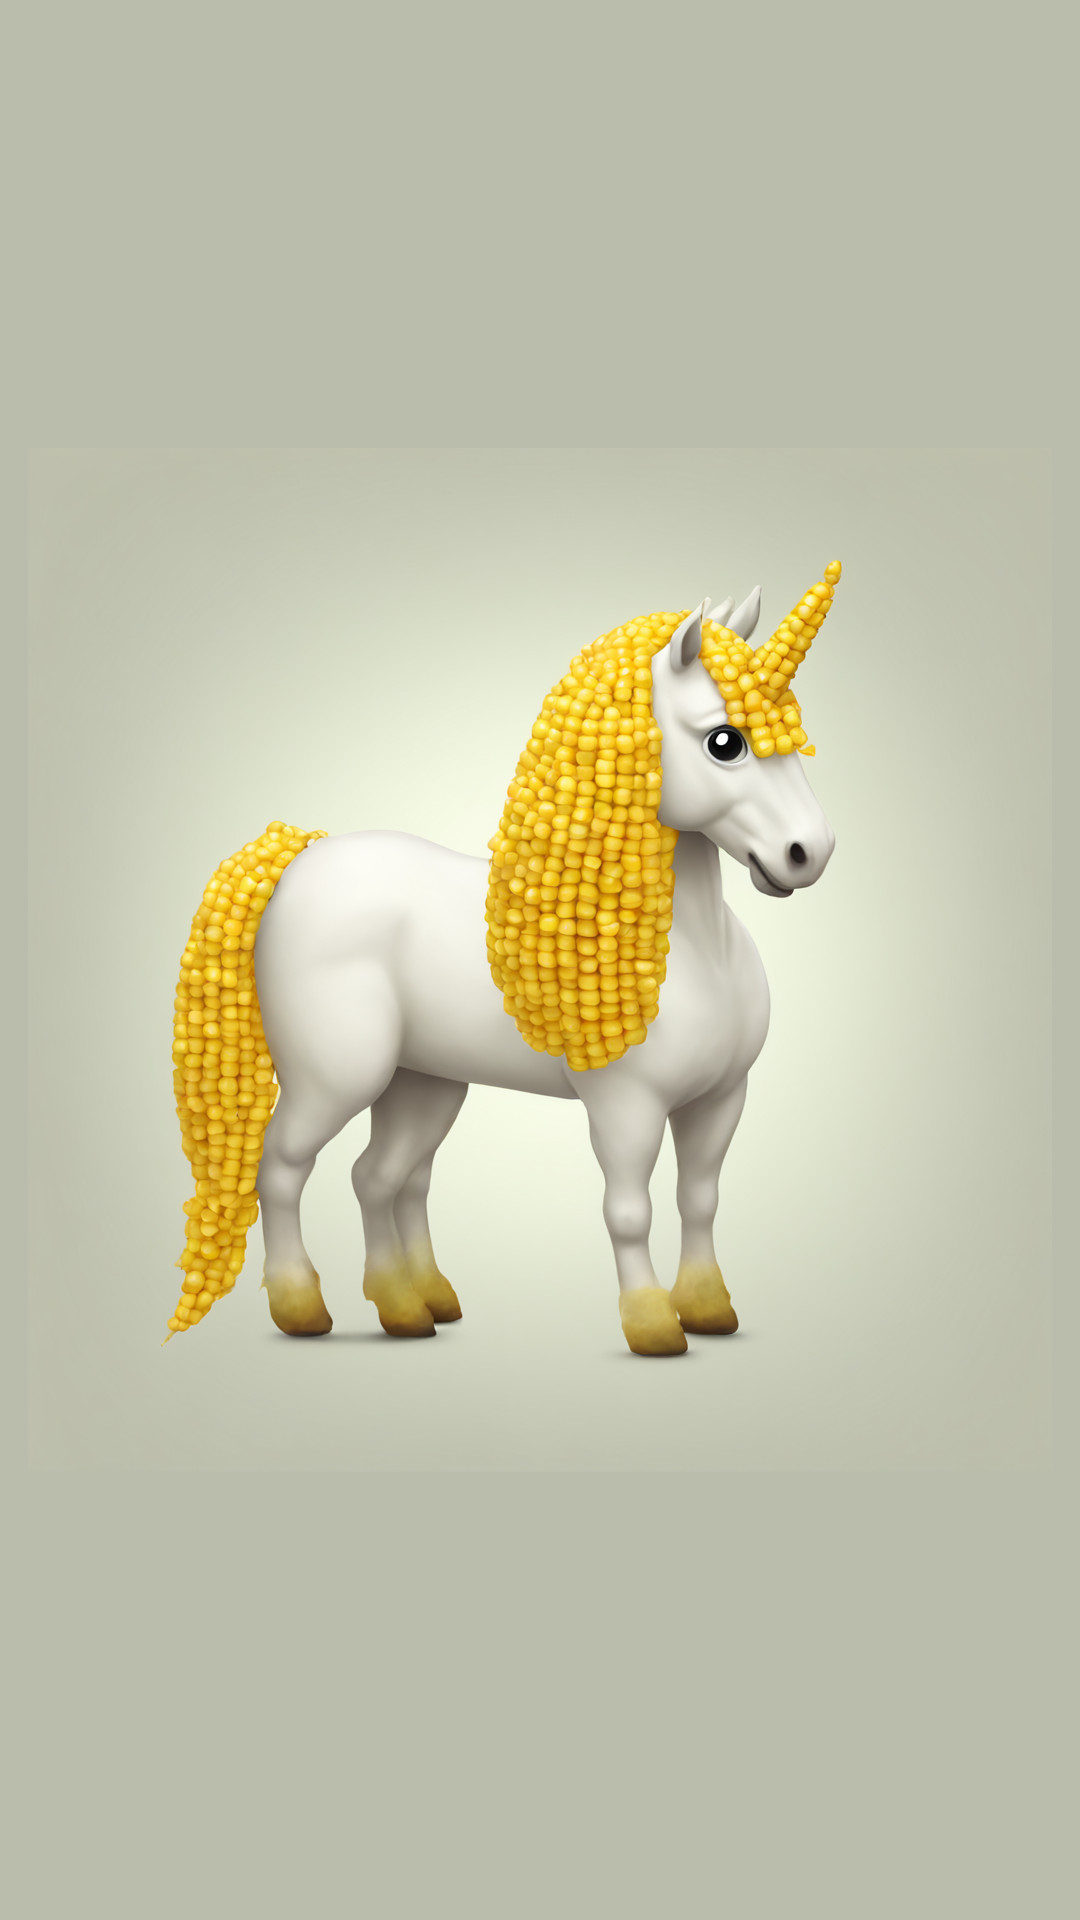 Unicorn made out of corn